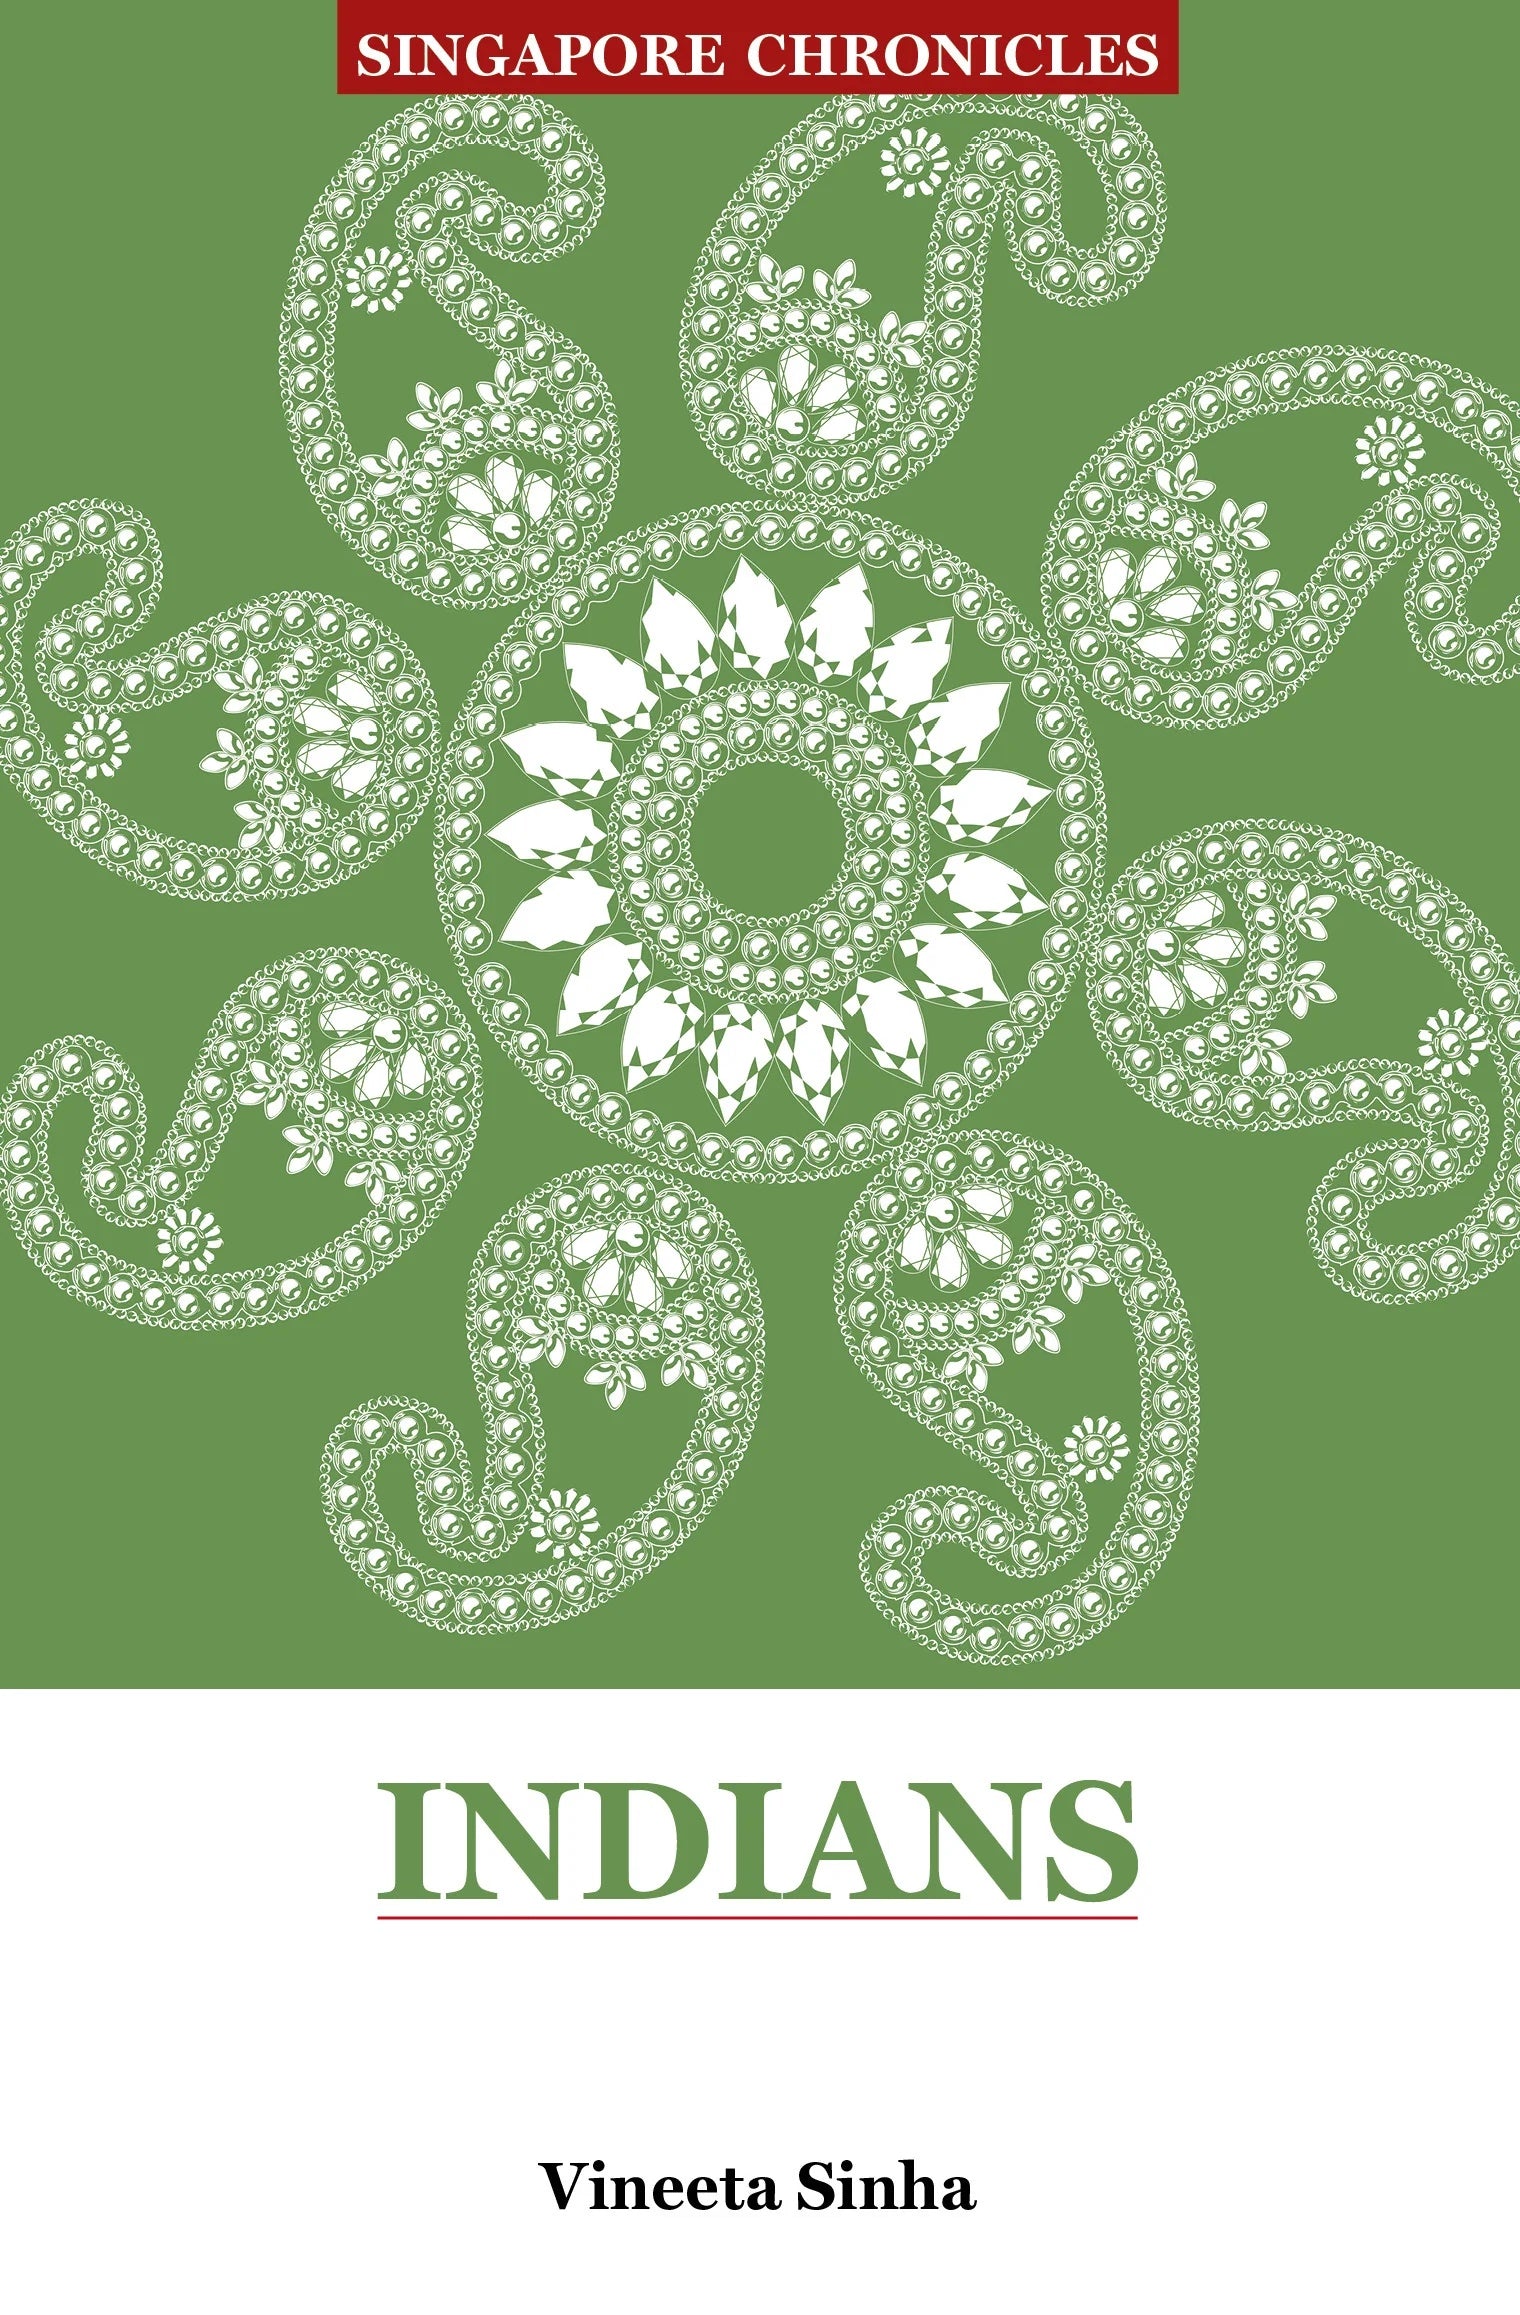 Singapore Chronicles: Indians